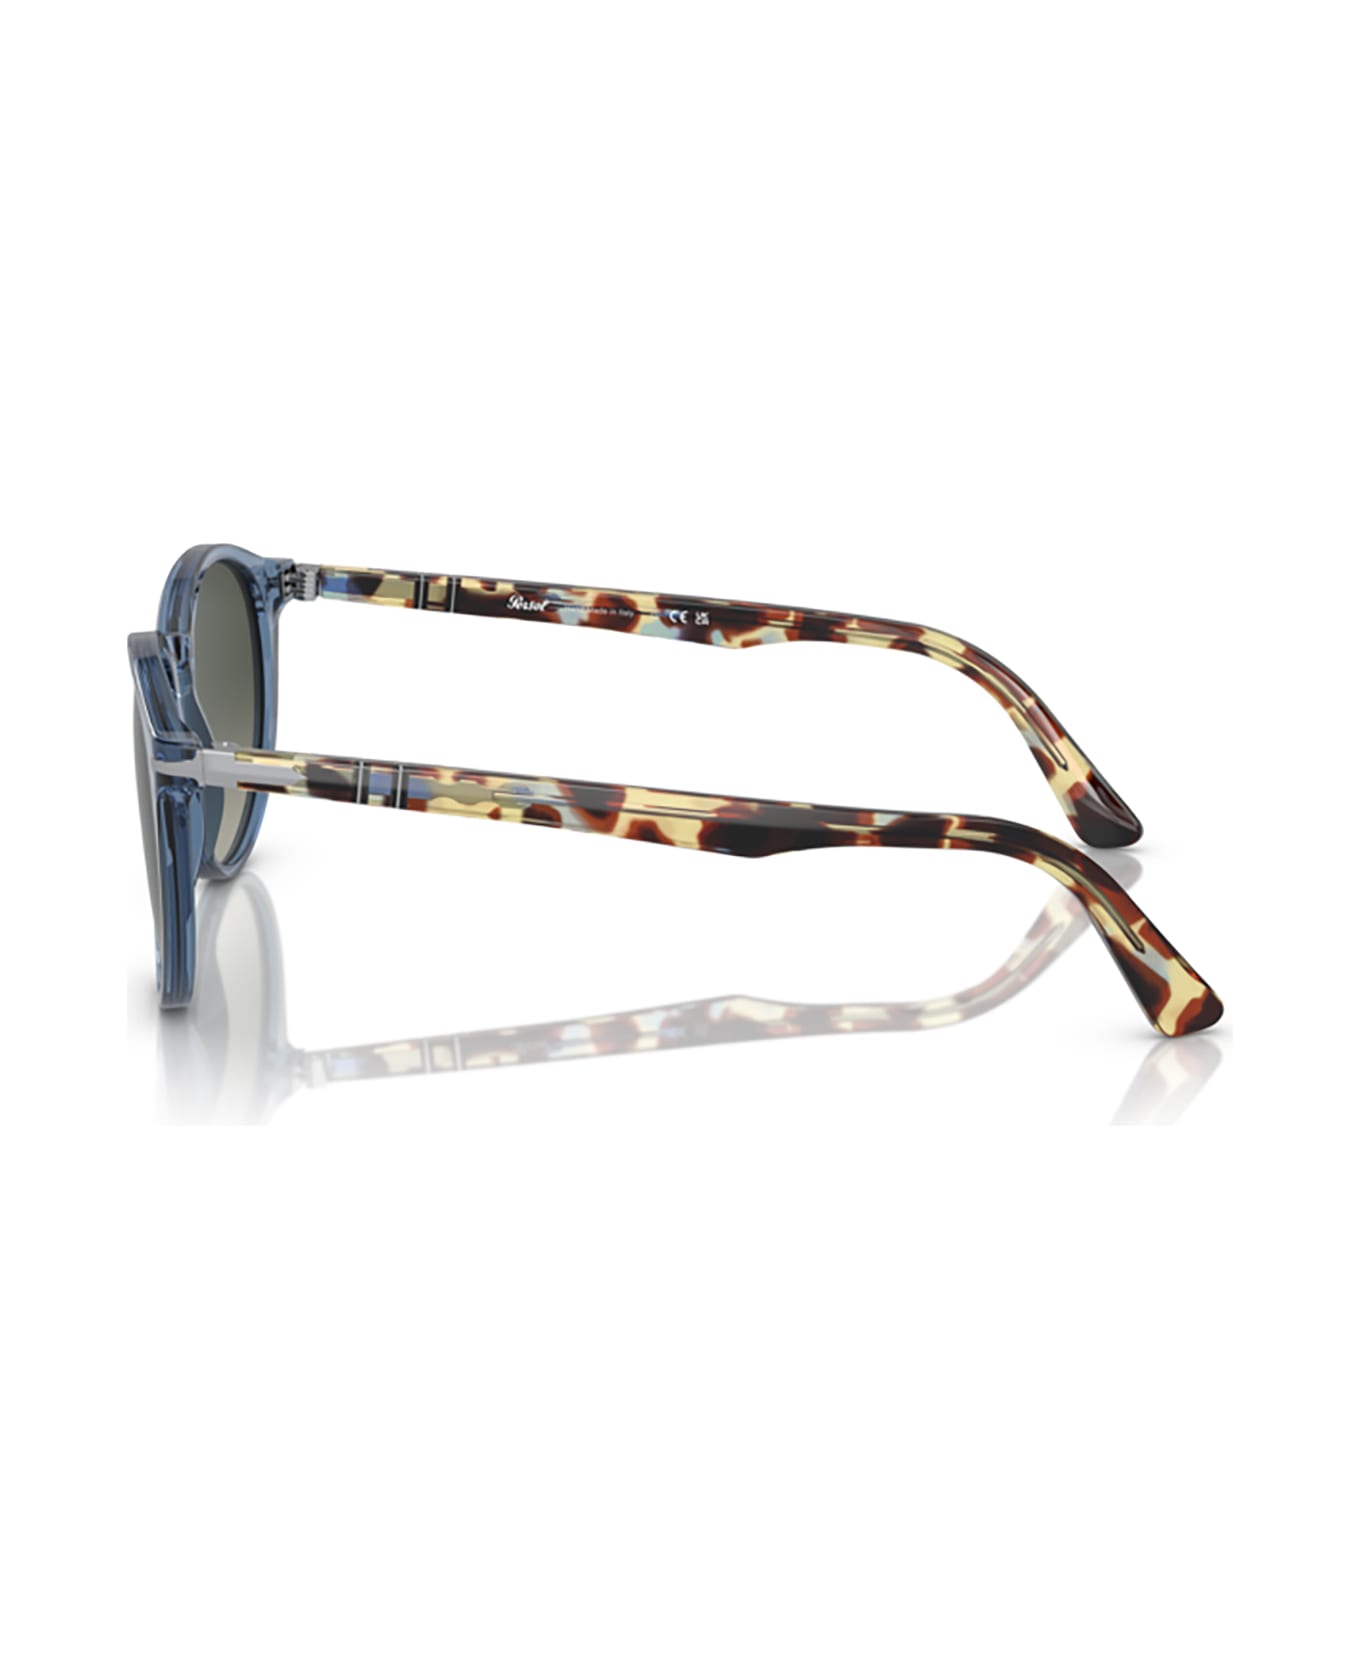 Persol Po3152s Transparent Navy Sunglasses - Transparent Navy サングラス